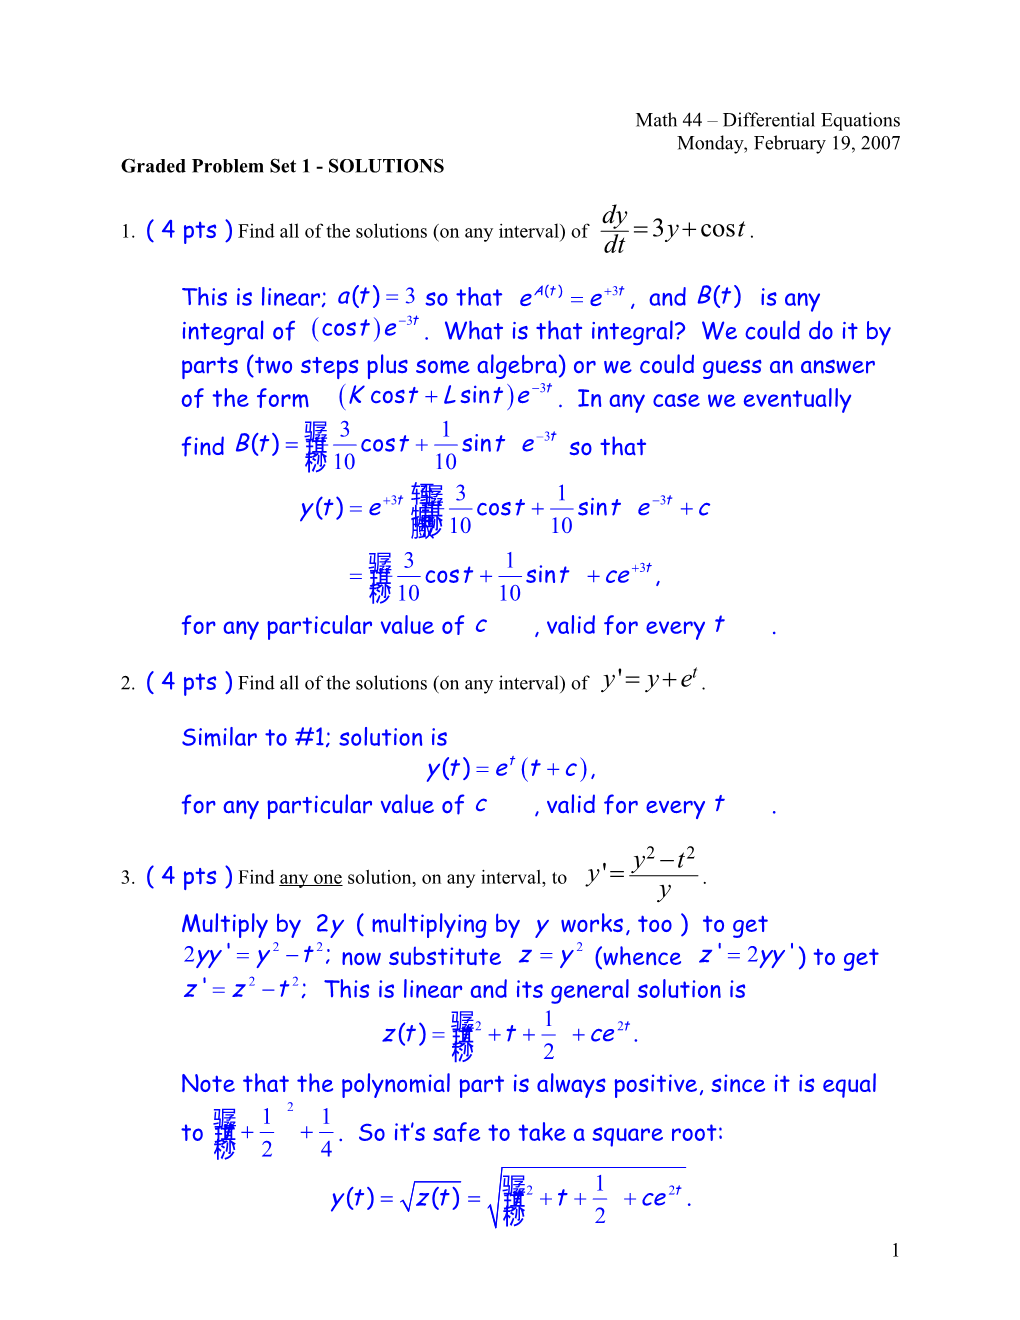 Graded Problem Set 1 - SOLUTIONS